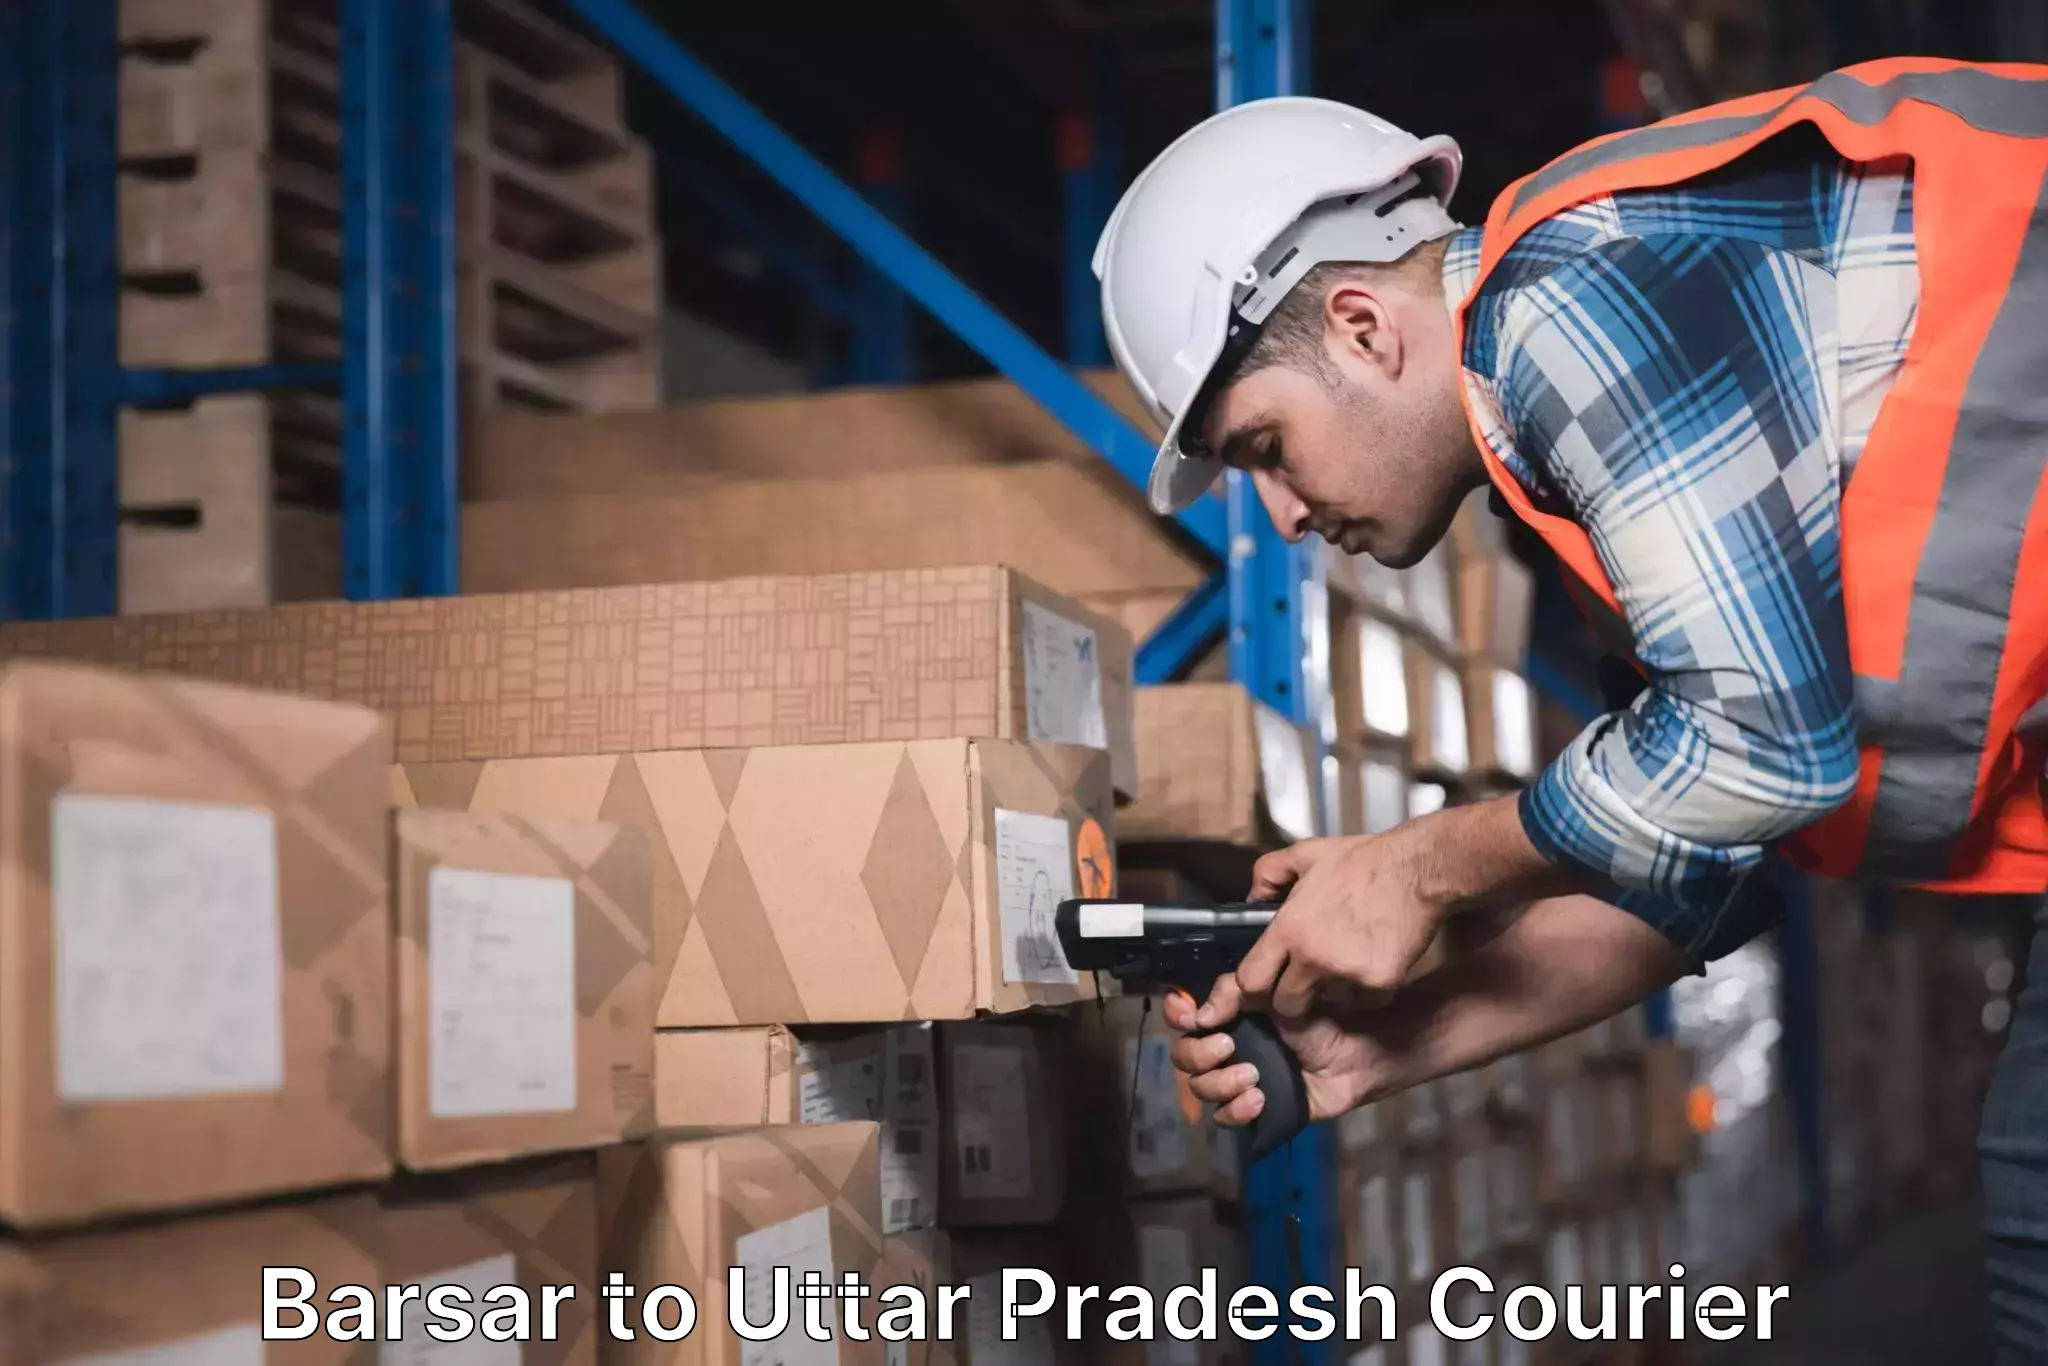 Courier service partnerships Barsar to Ambedkar Nagar